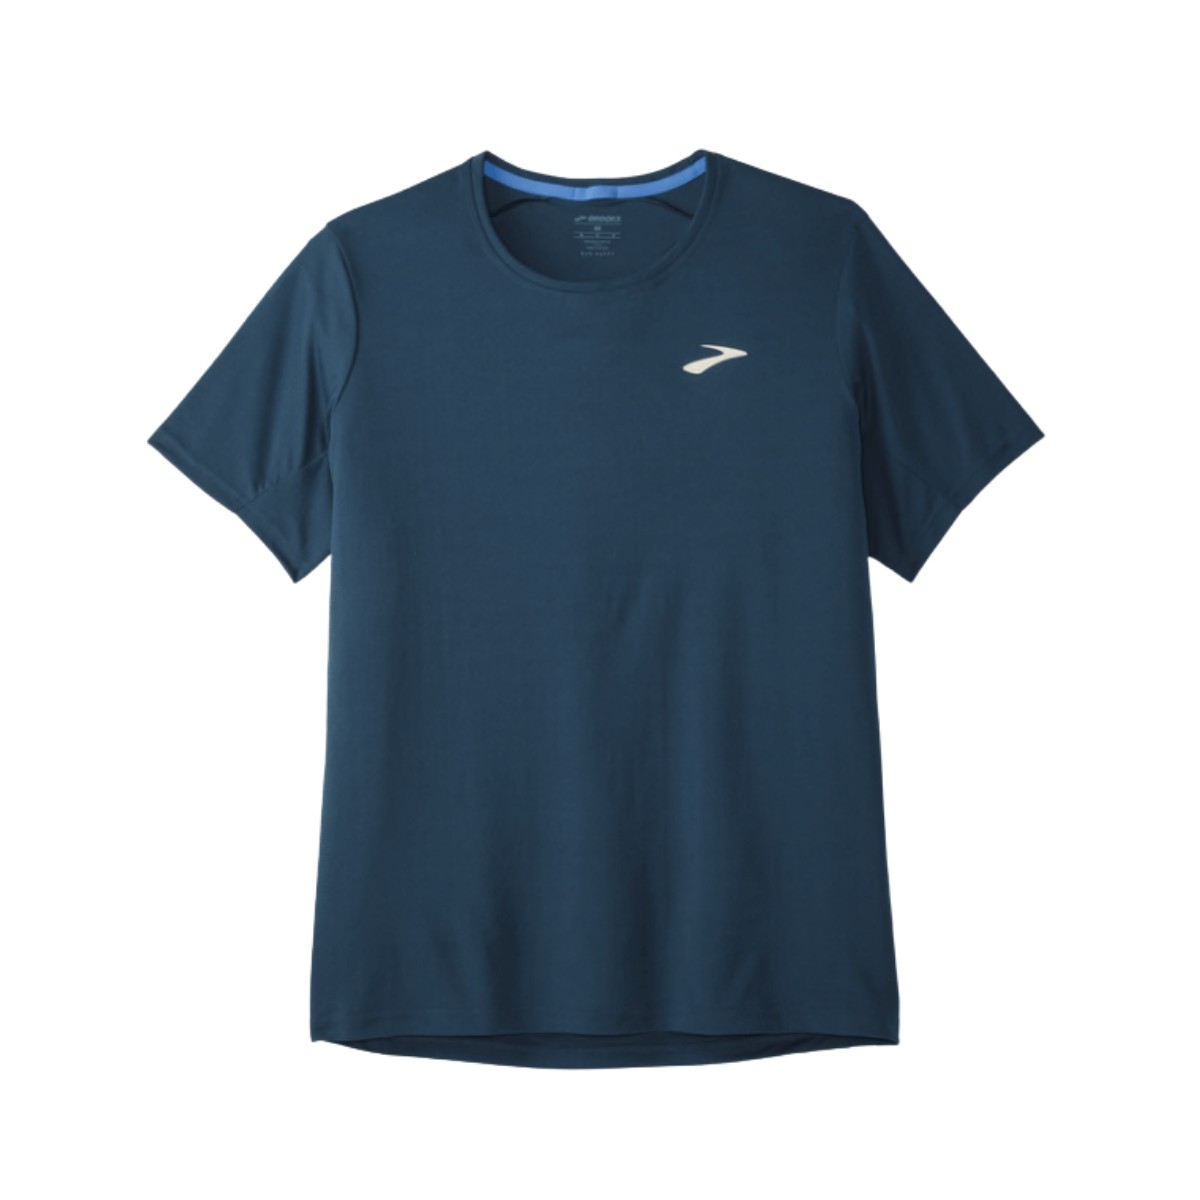 Brooks Atmosphere Short Sleeve T-Shirt Navy Blue White, Tamanho S